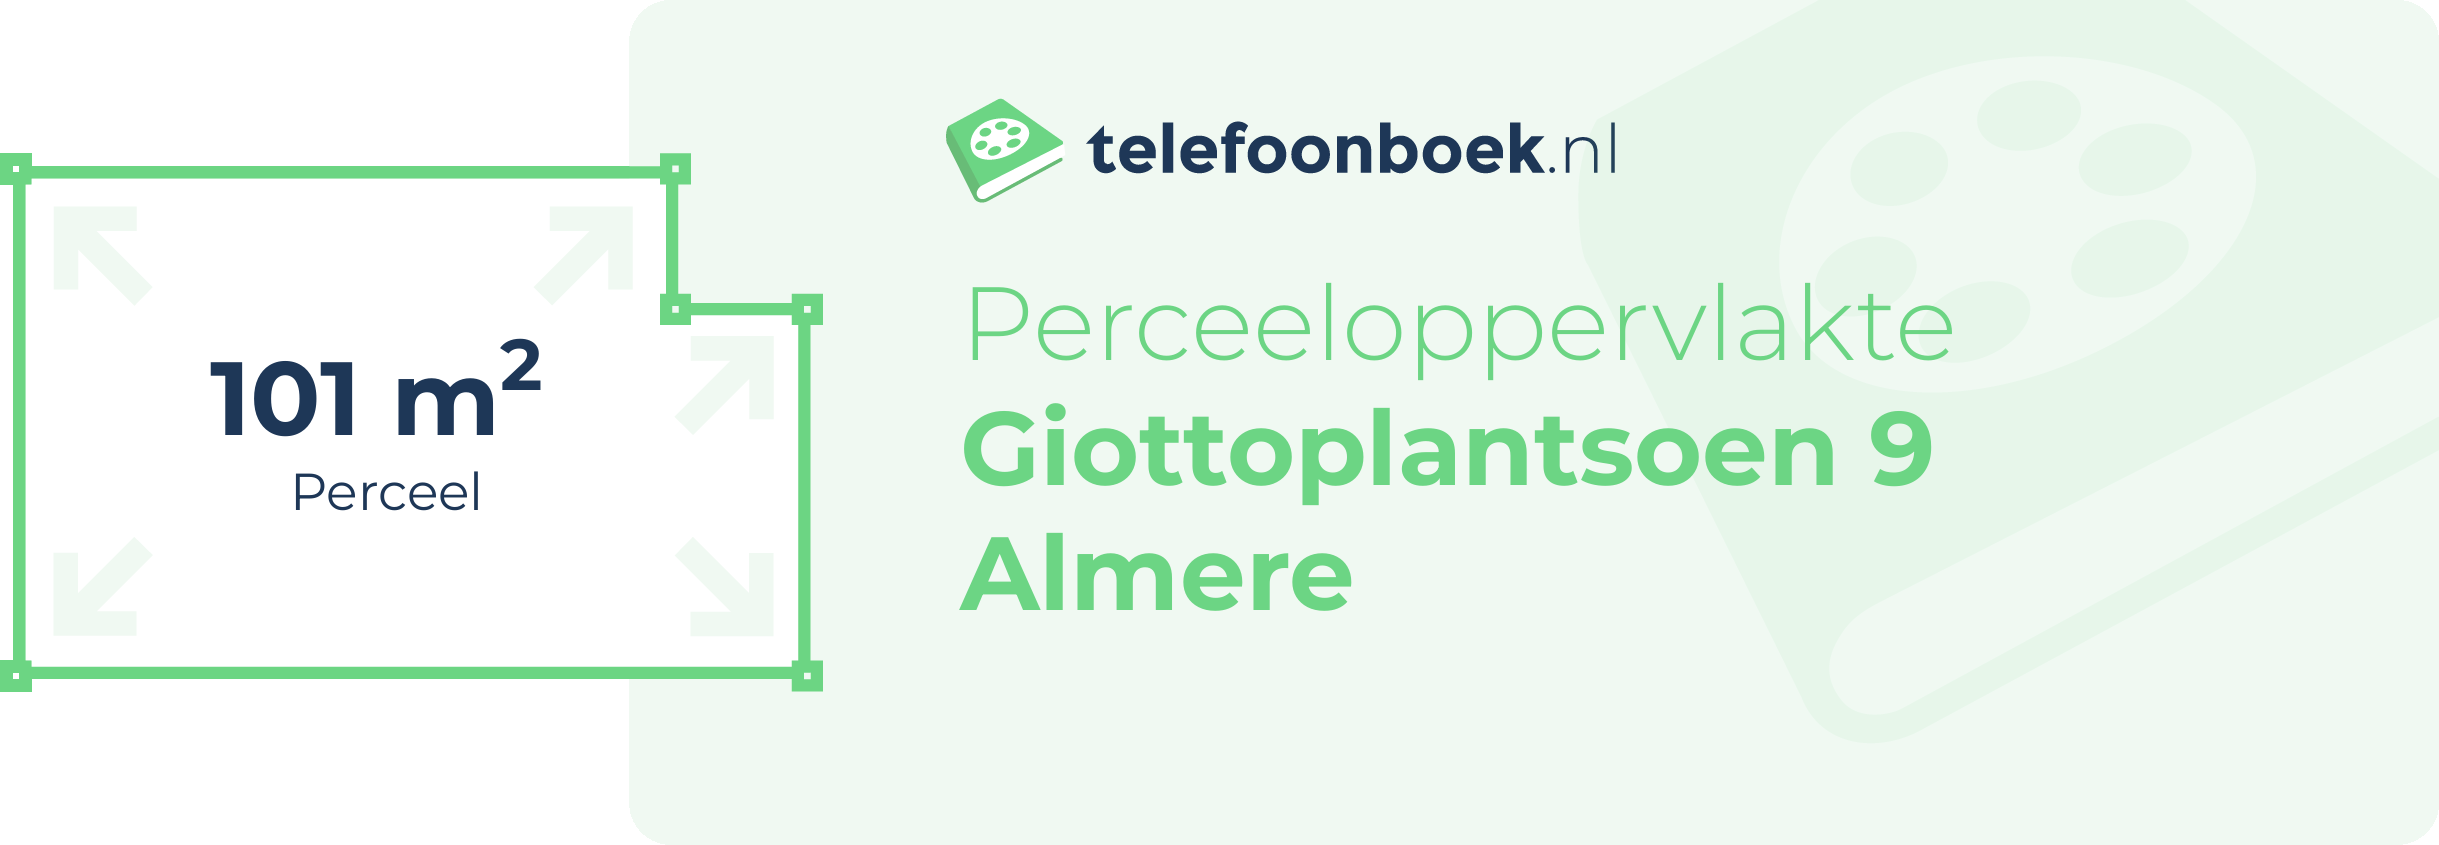 Perceeloppervlakte Giottoplantsoen 9 Almere